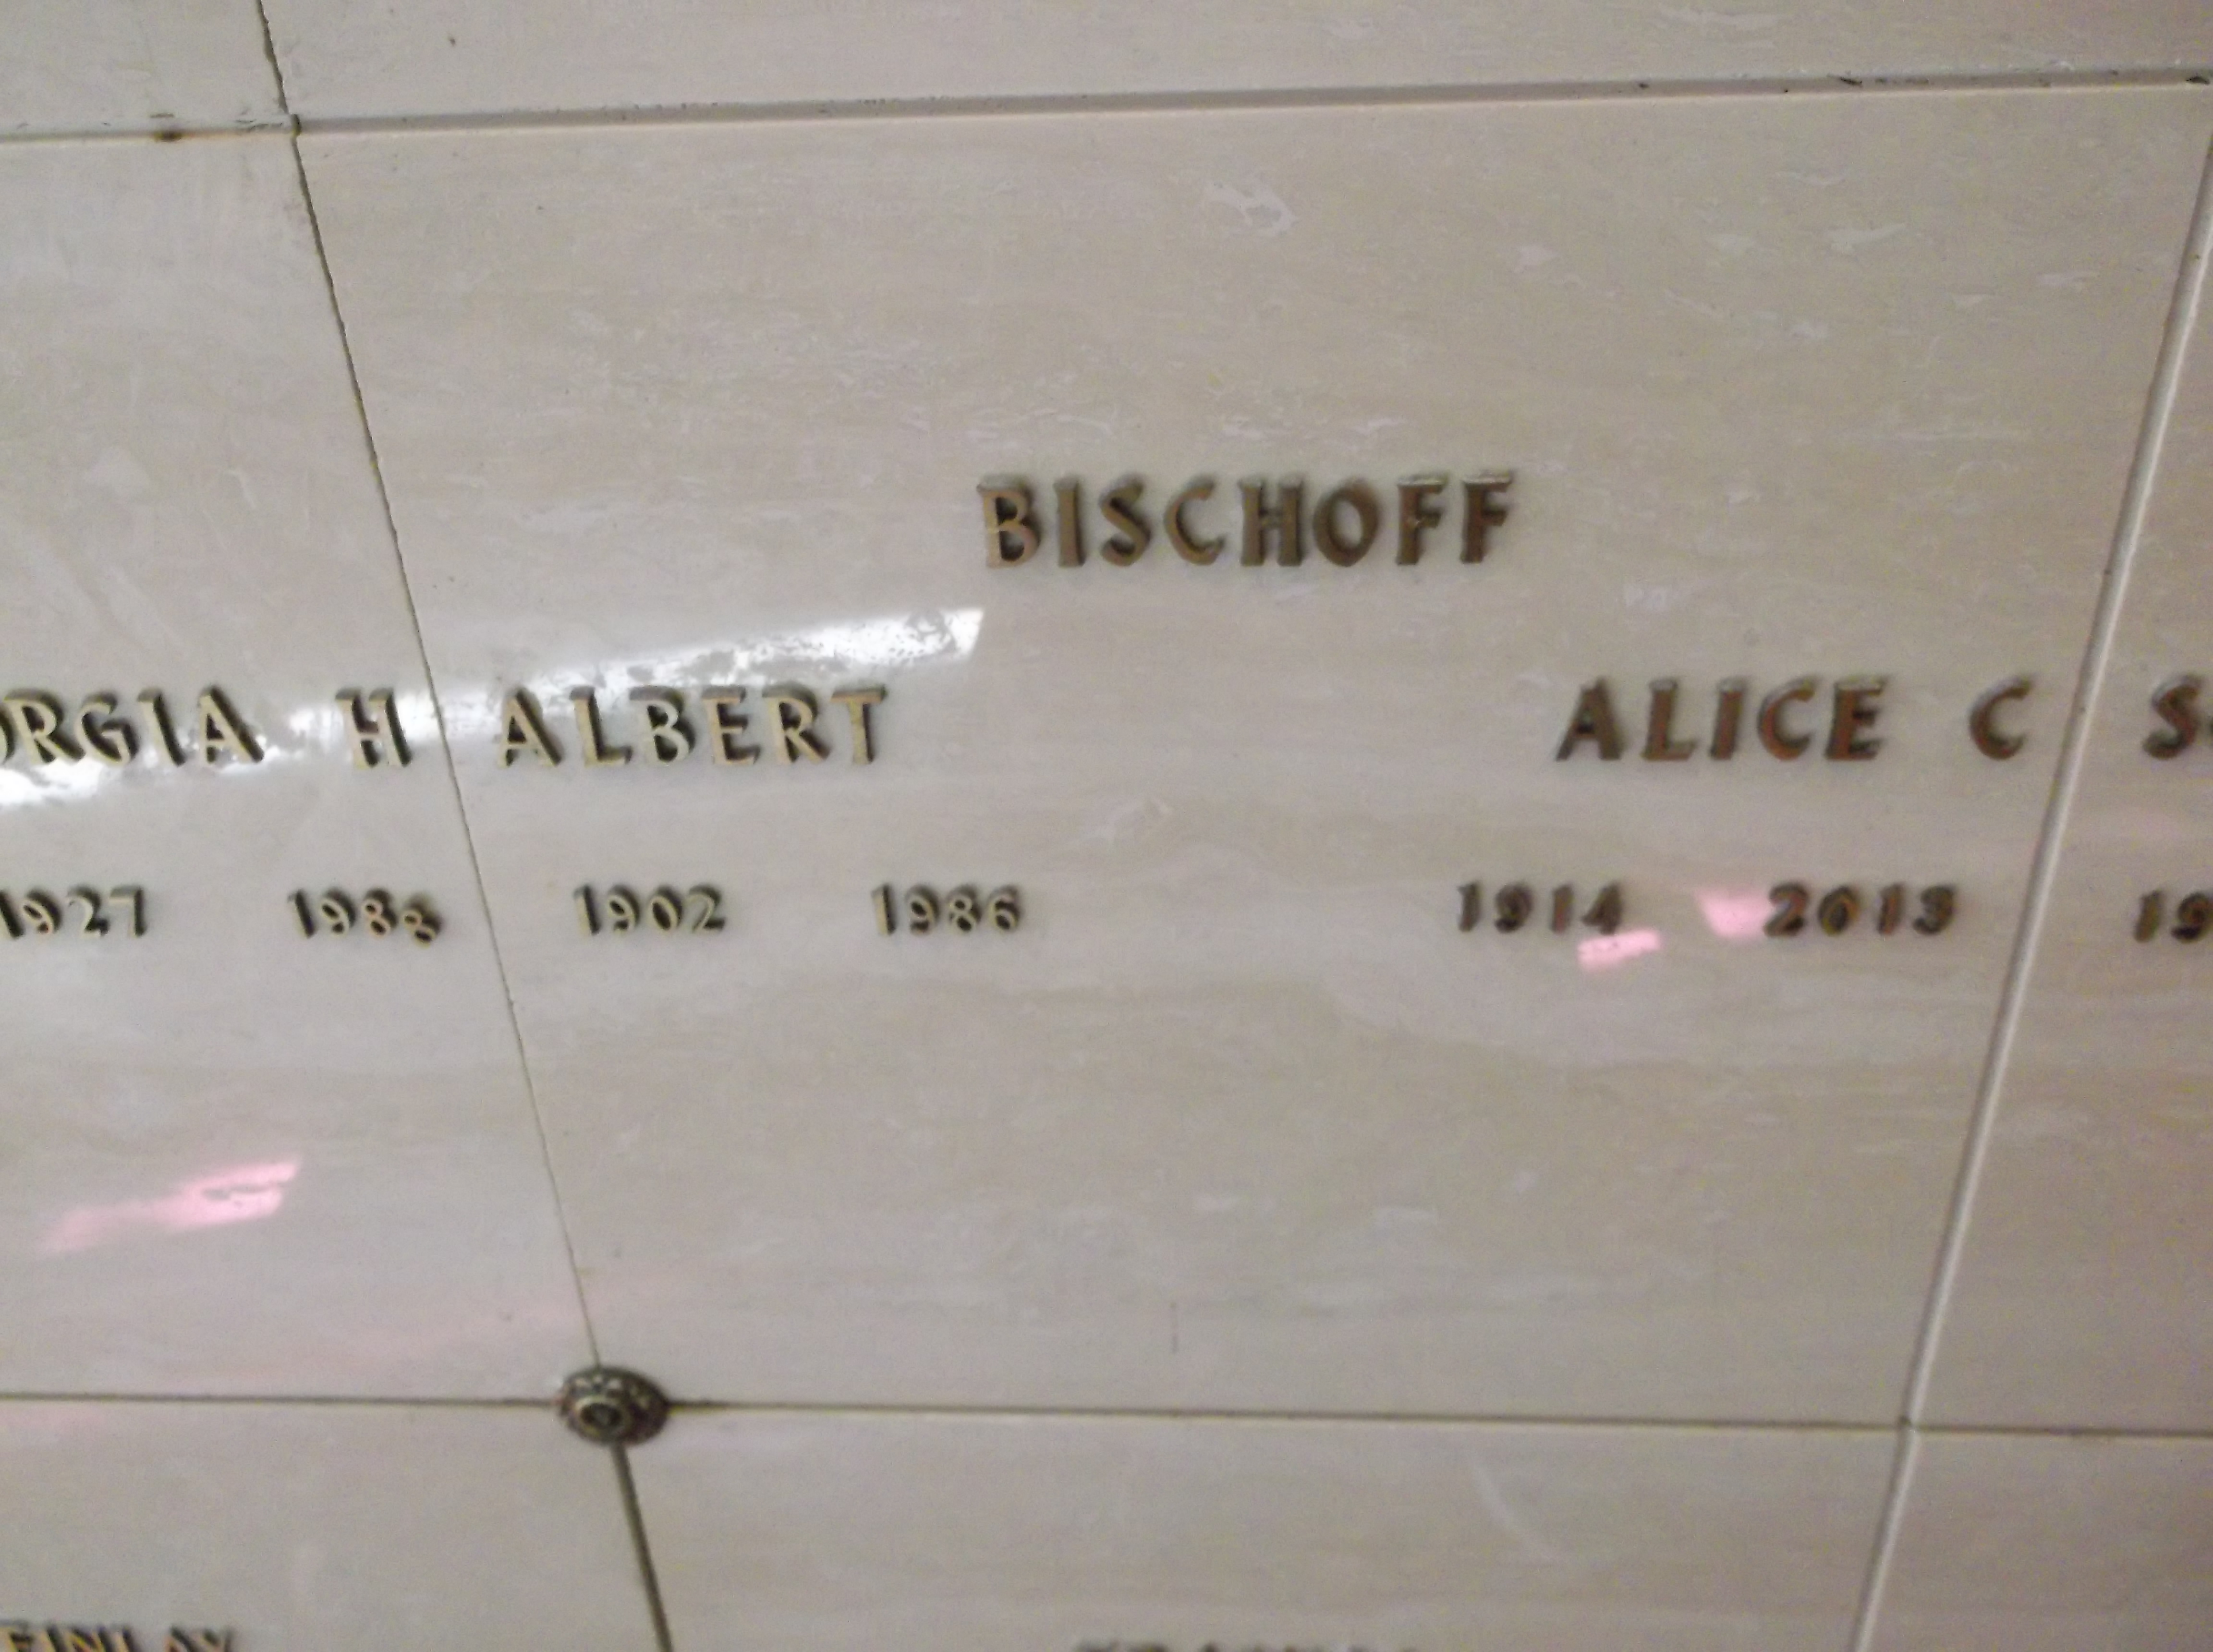 Alice C Bischoff